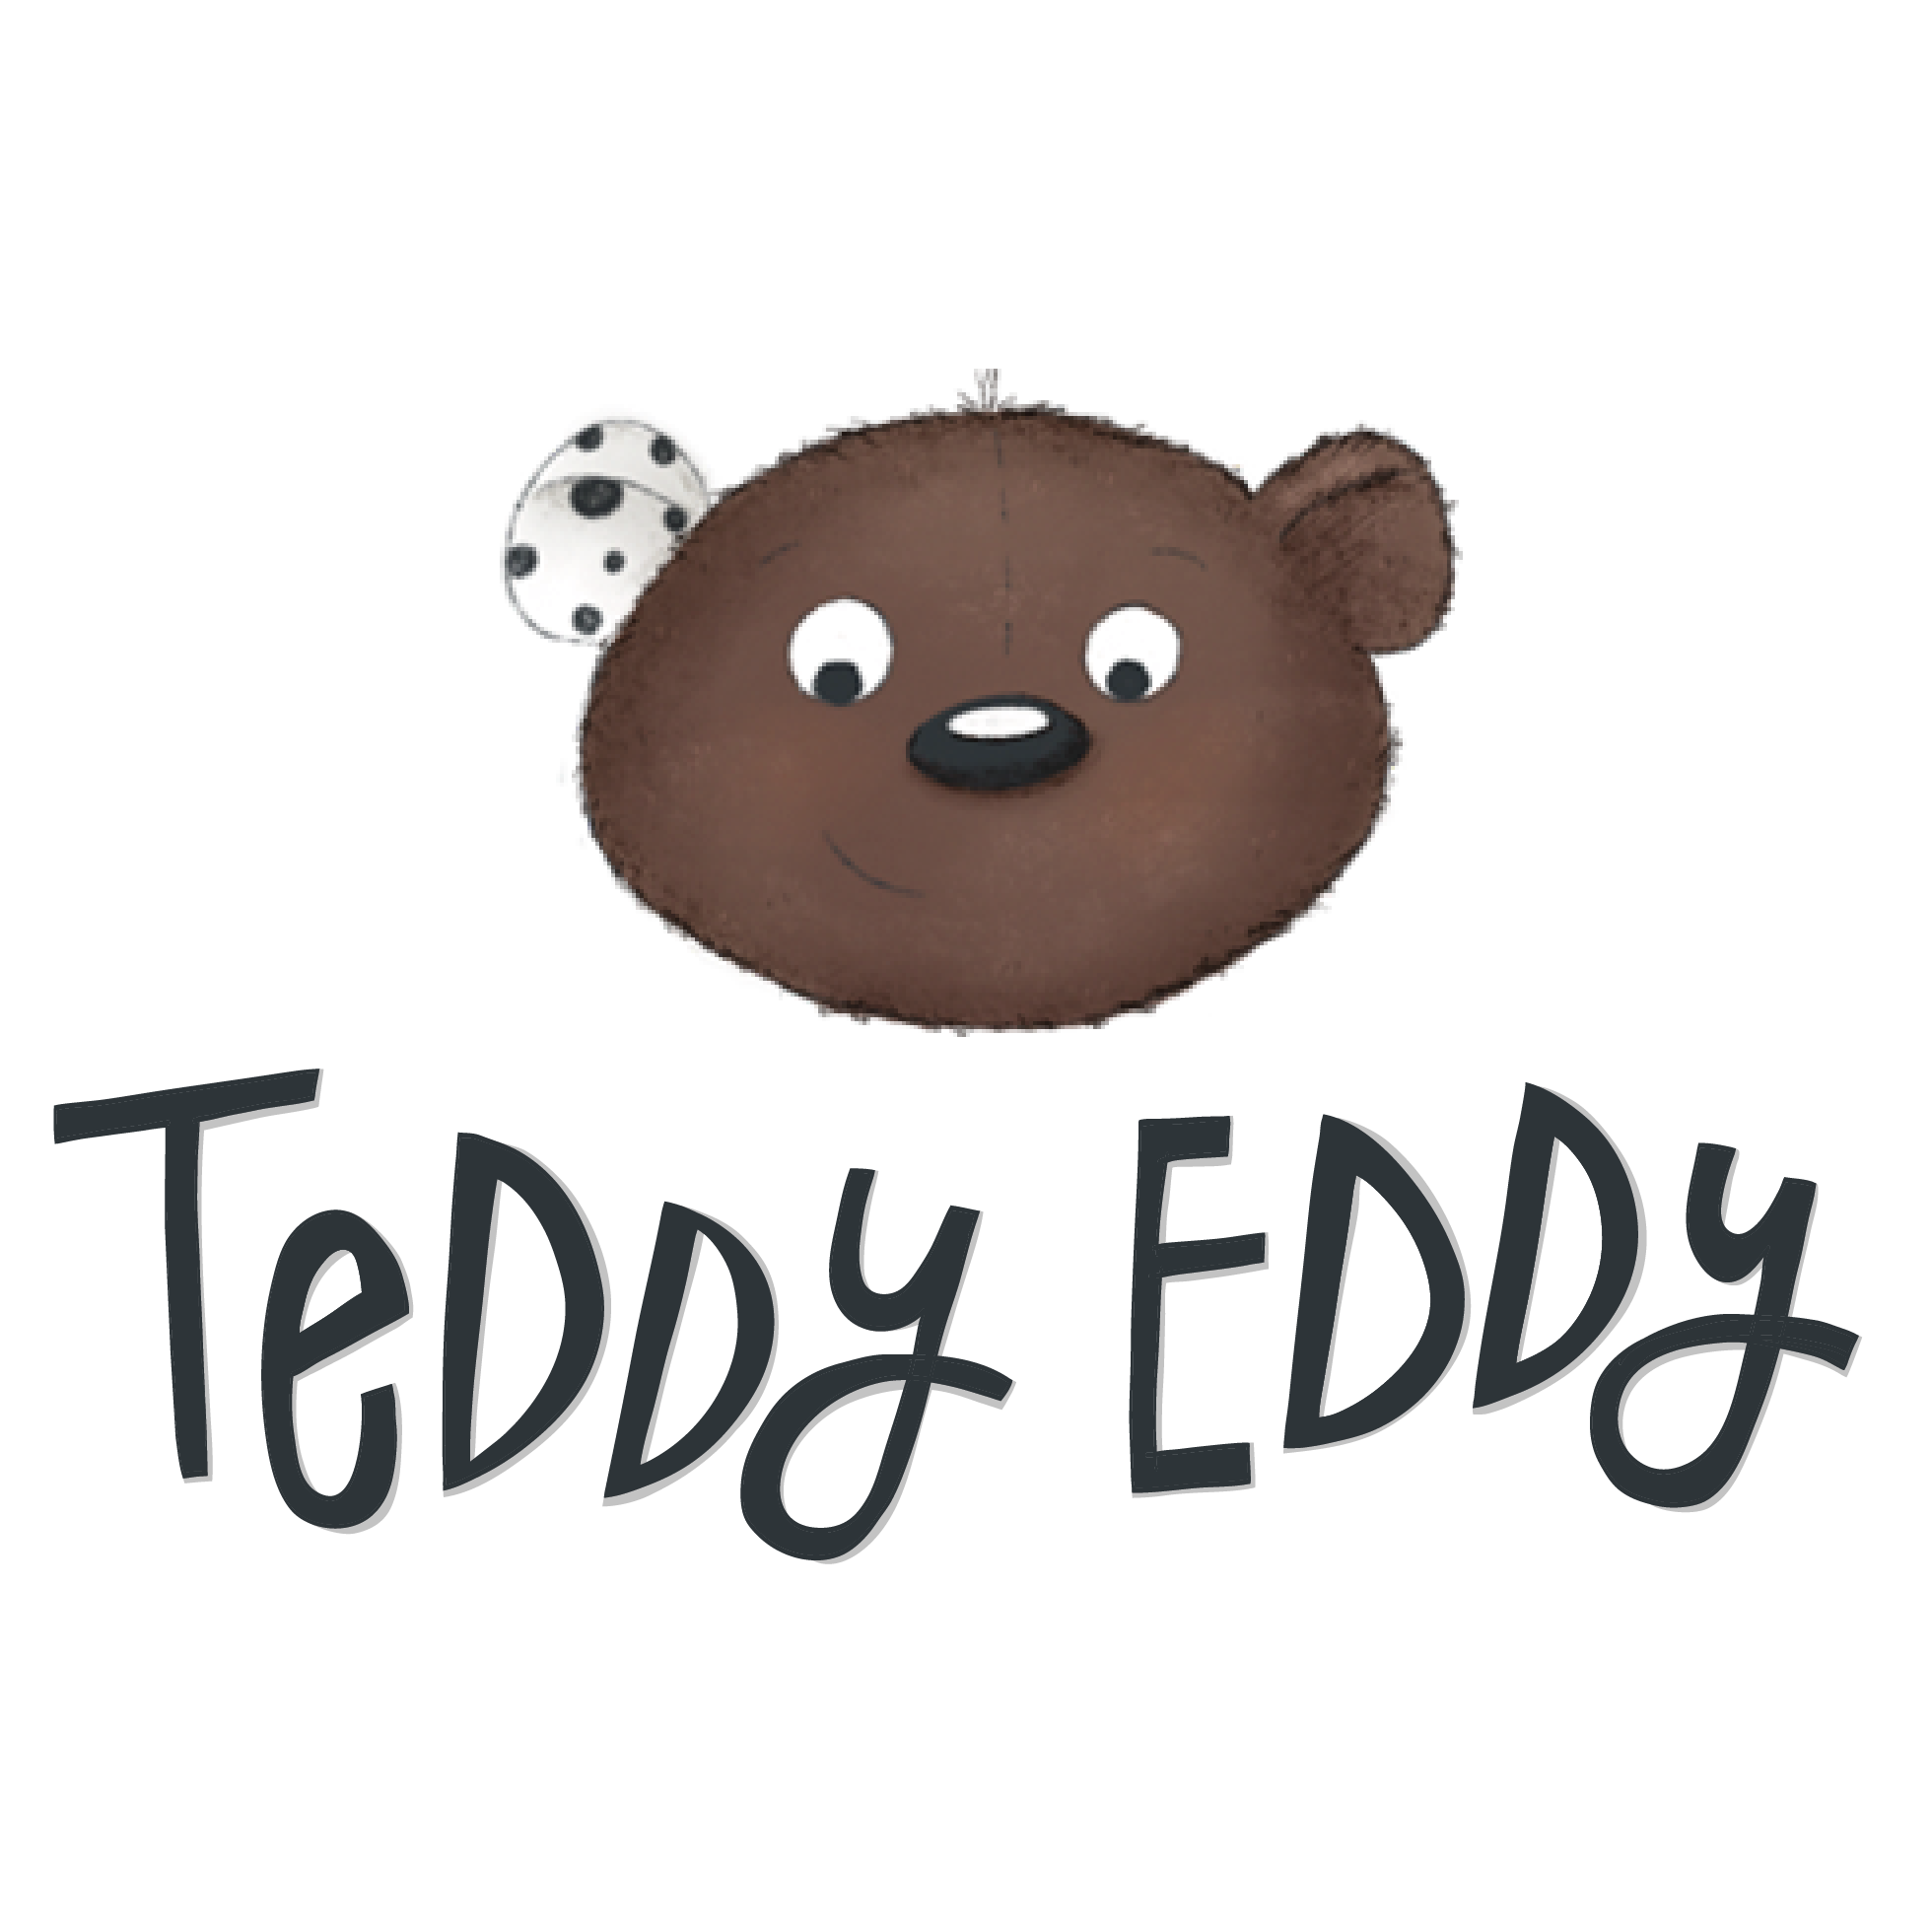 Teddy Eddy Logo Quadrat